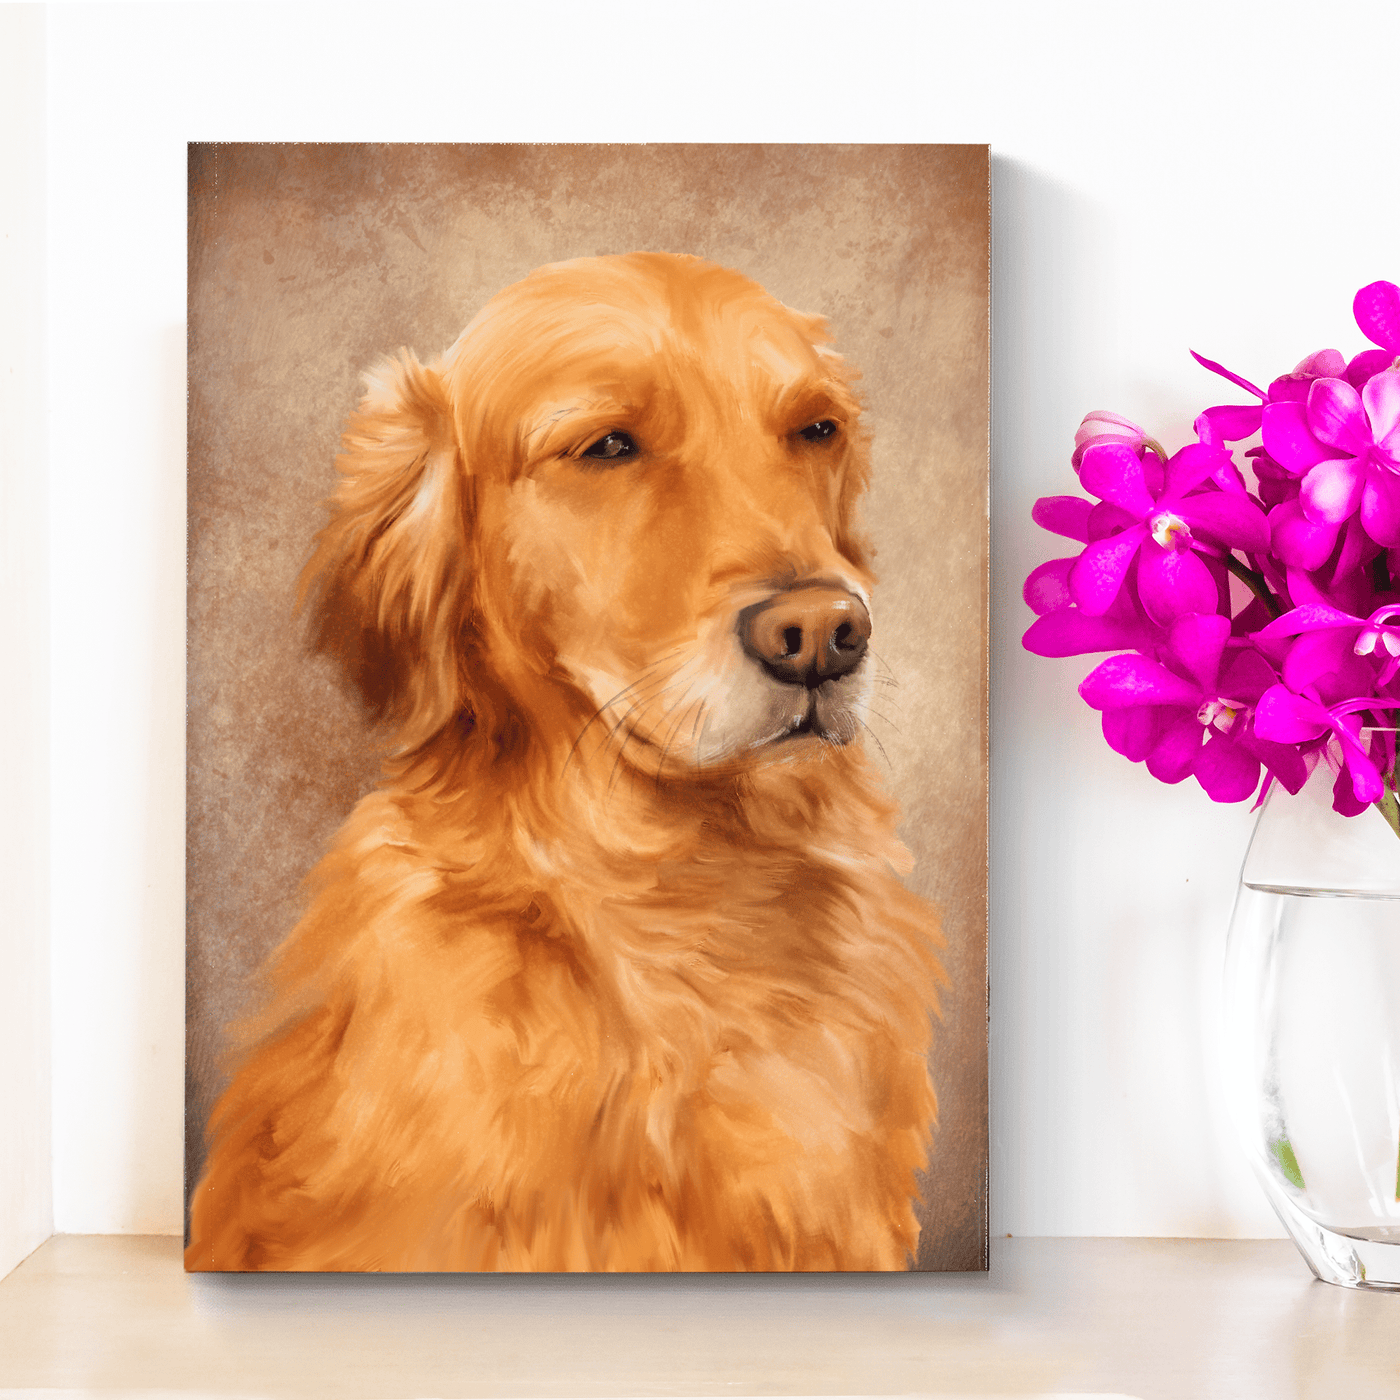 acrylic pet portraits of an adorable dog